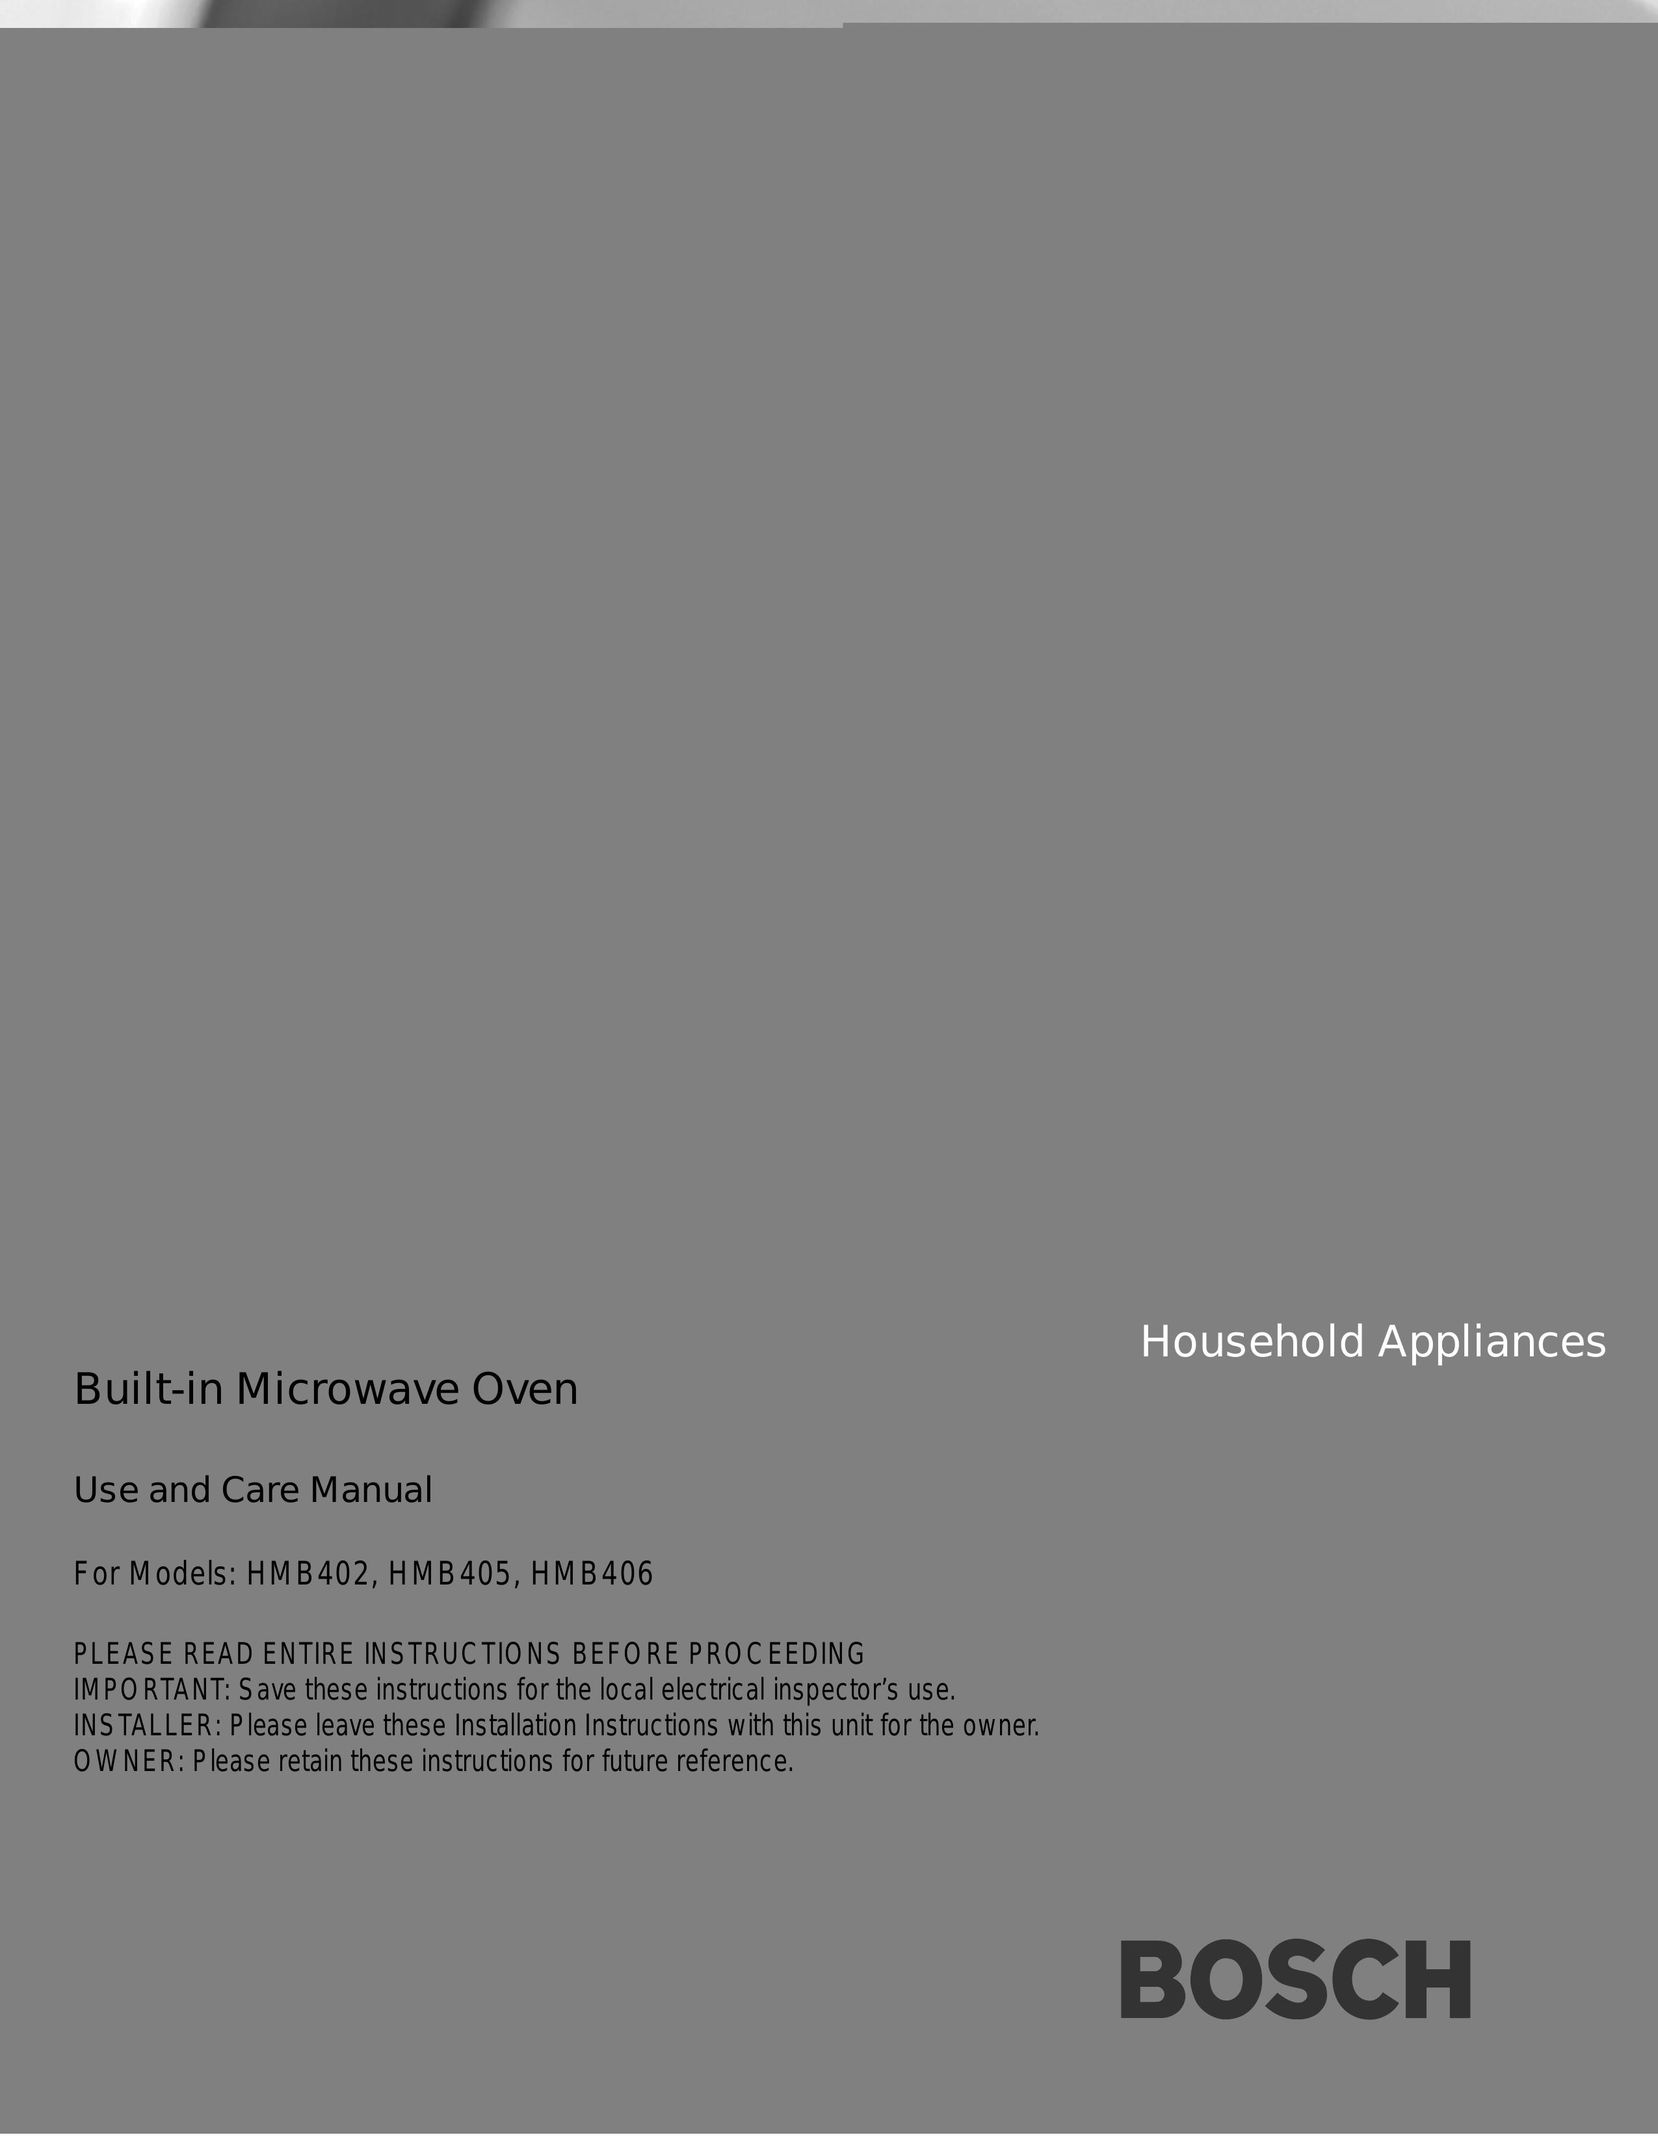 Bosch Appliances HMB406 Microwave Oven User Manual